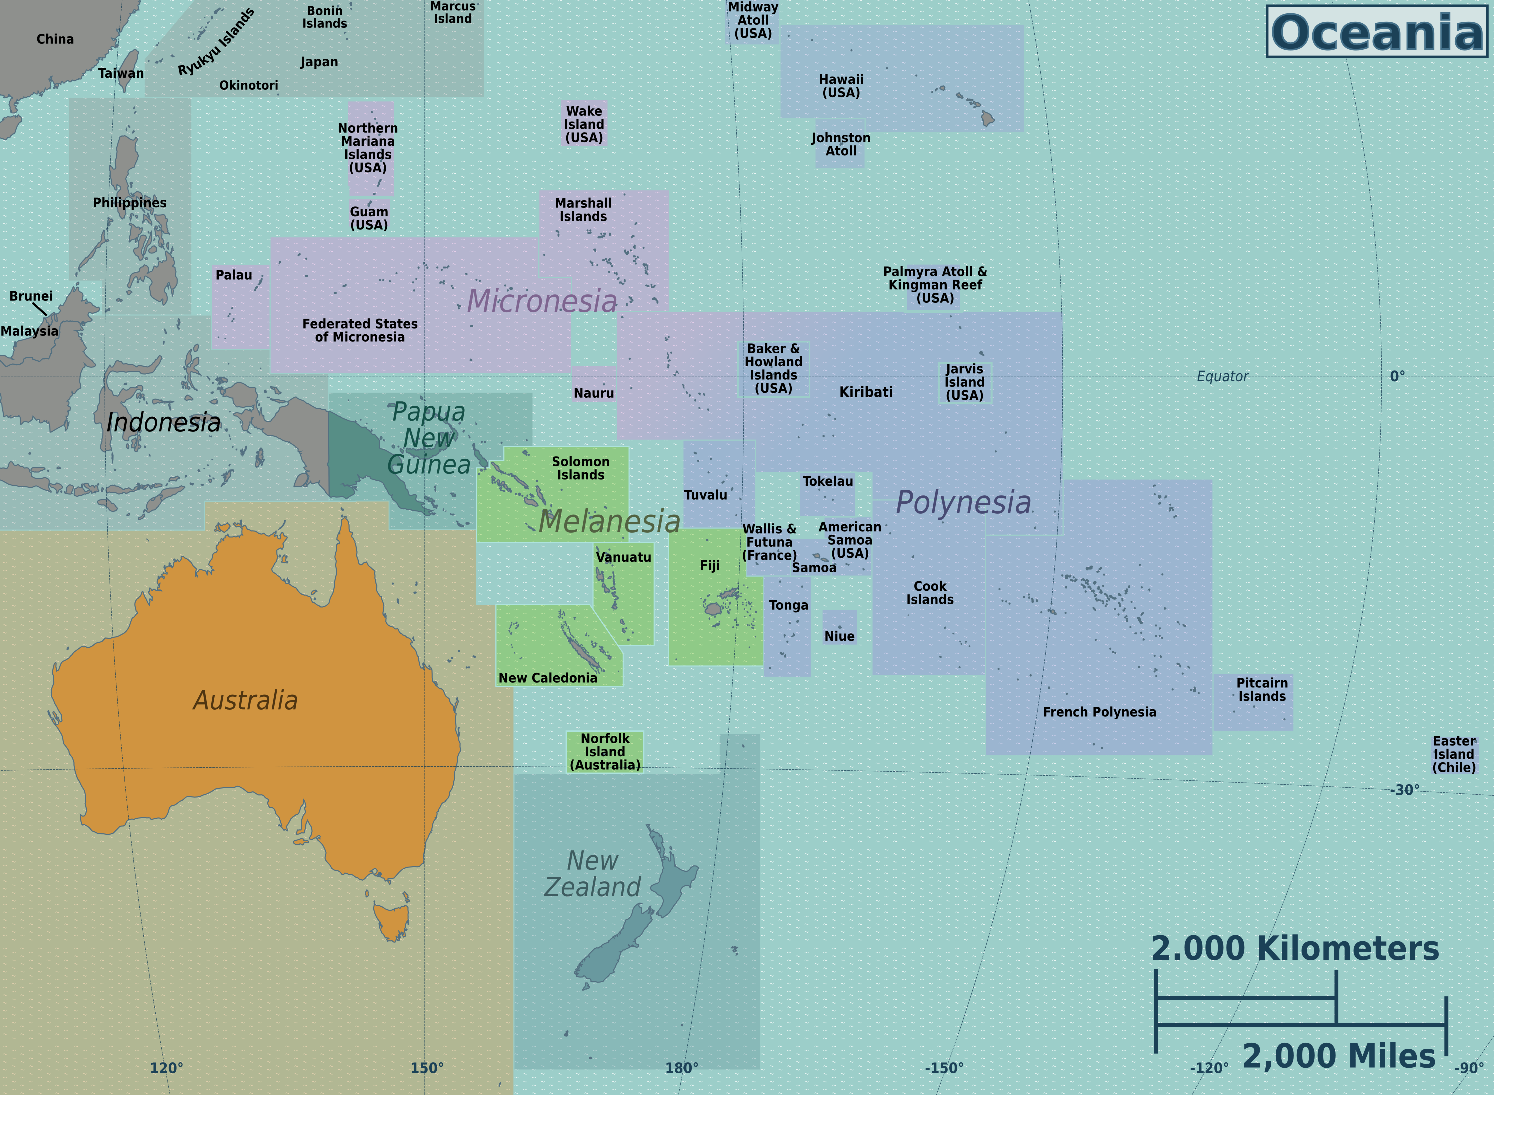 Oceania_regions_map2.png